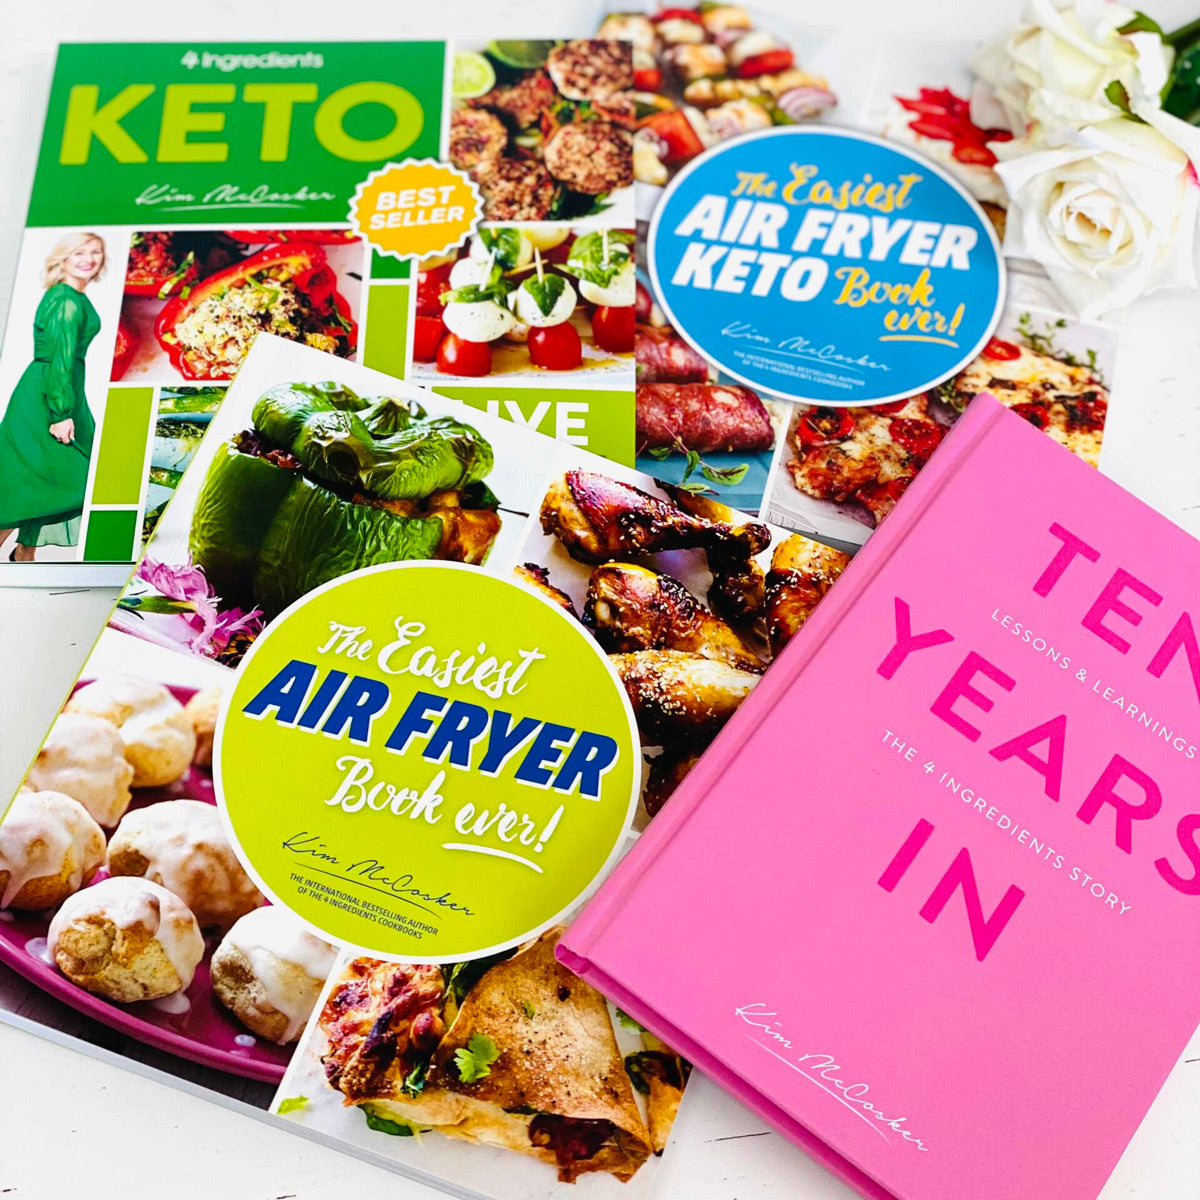 The Easiest Air Fryer Keto Book Ever eBook by Kim McCosker